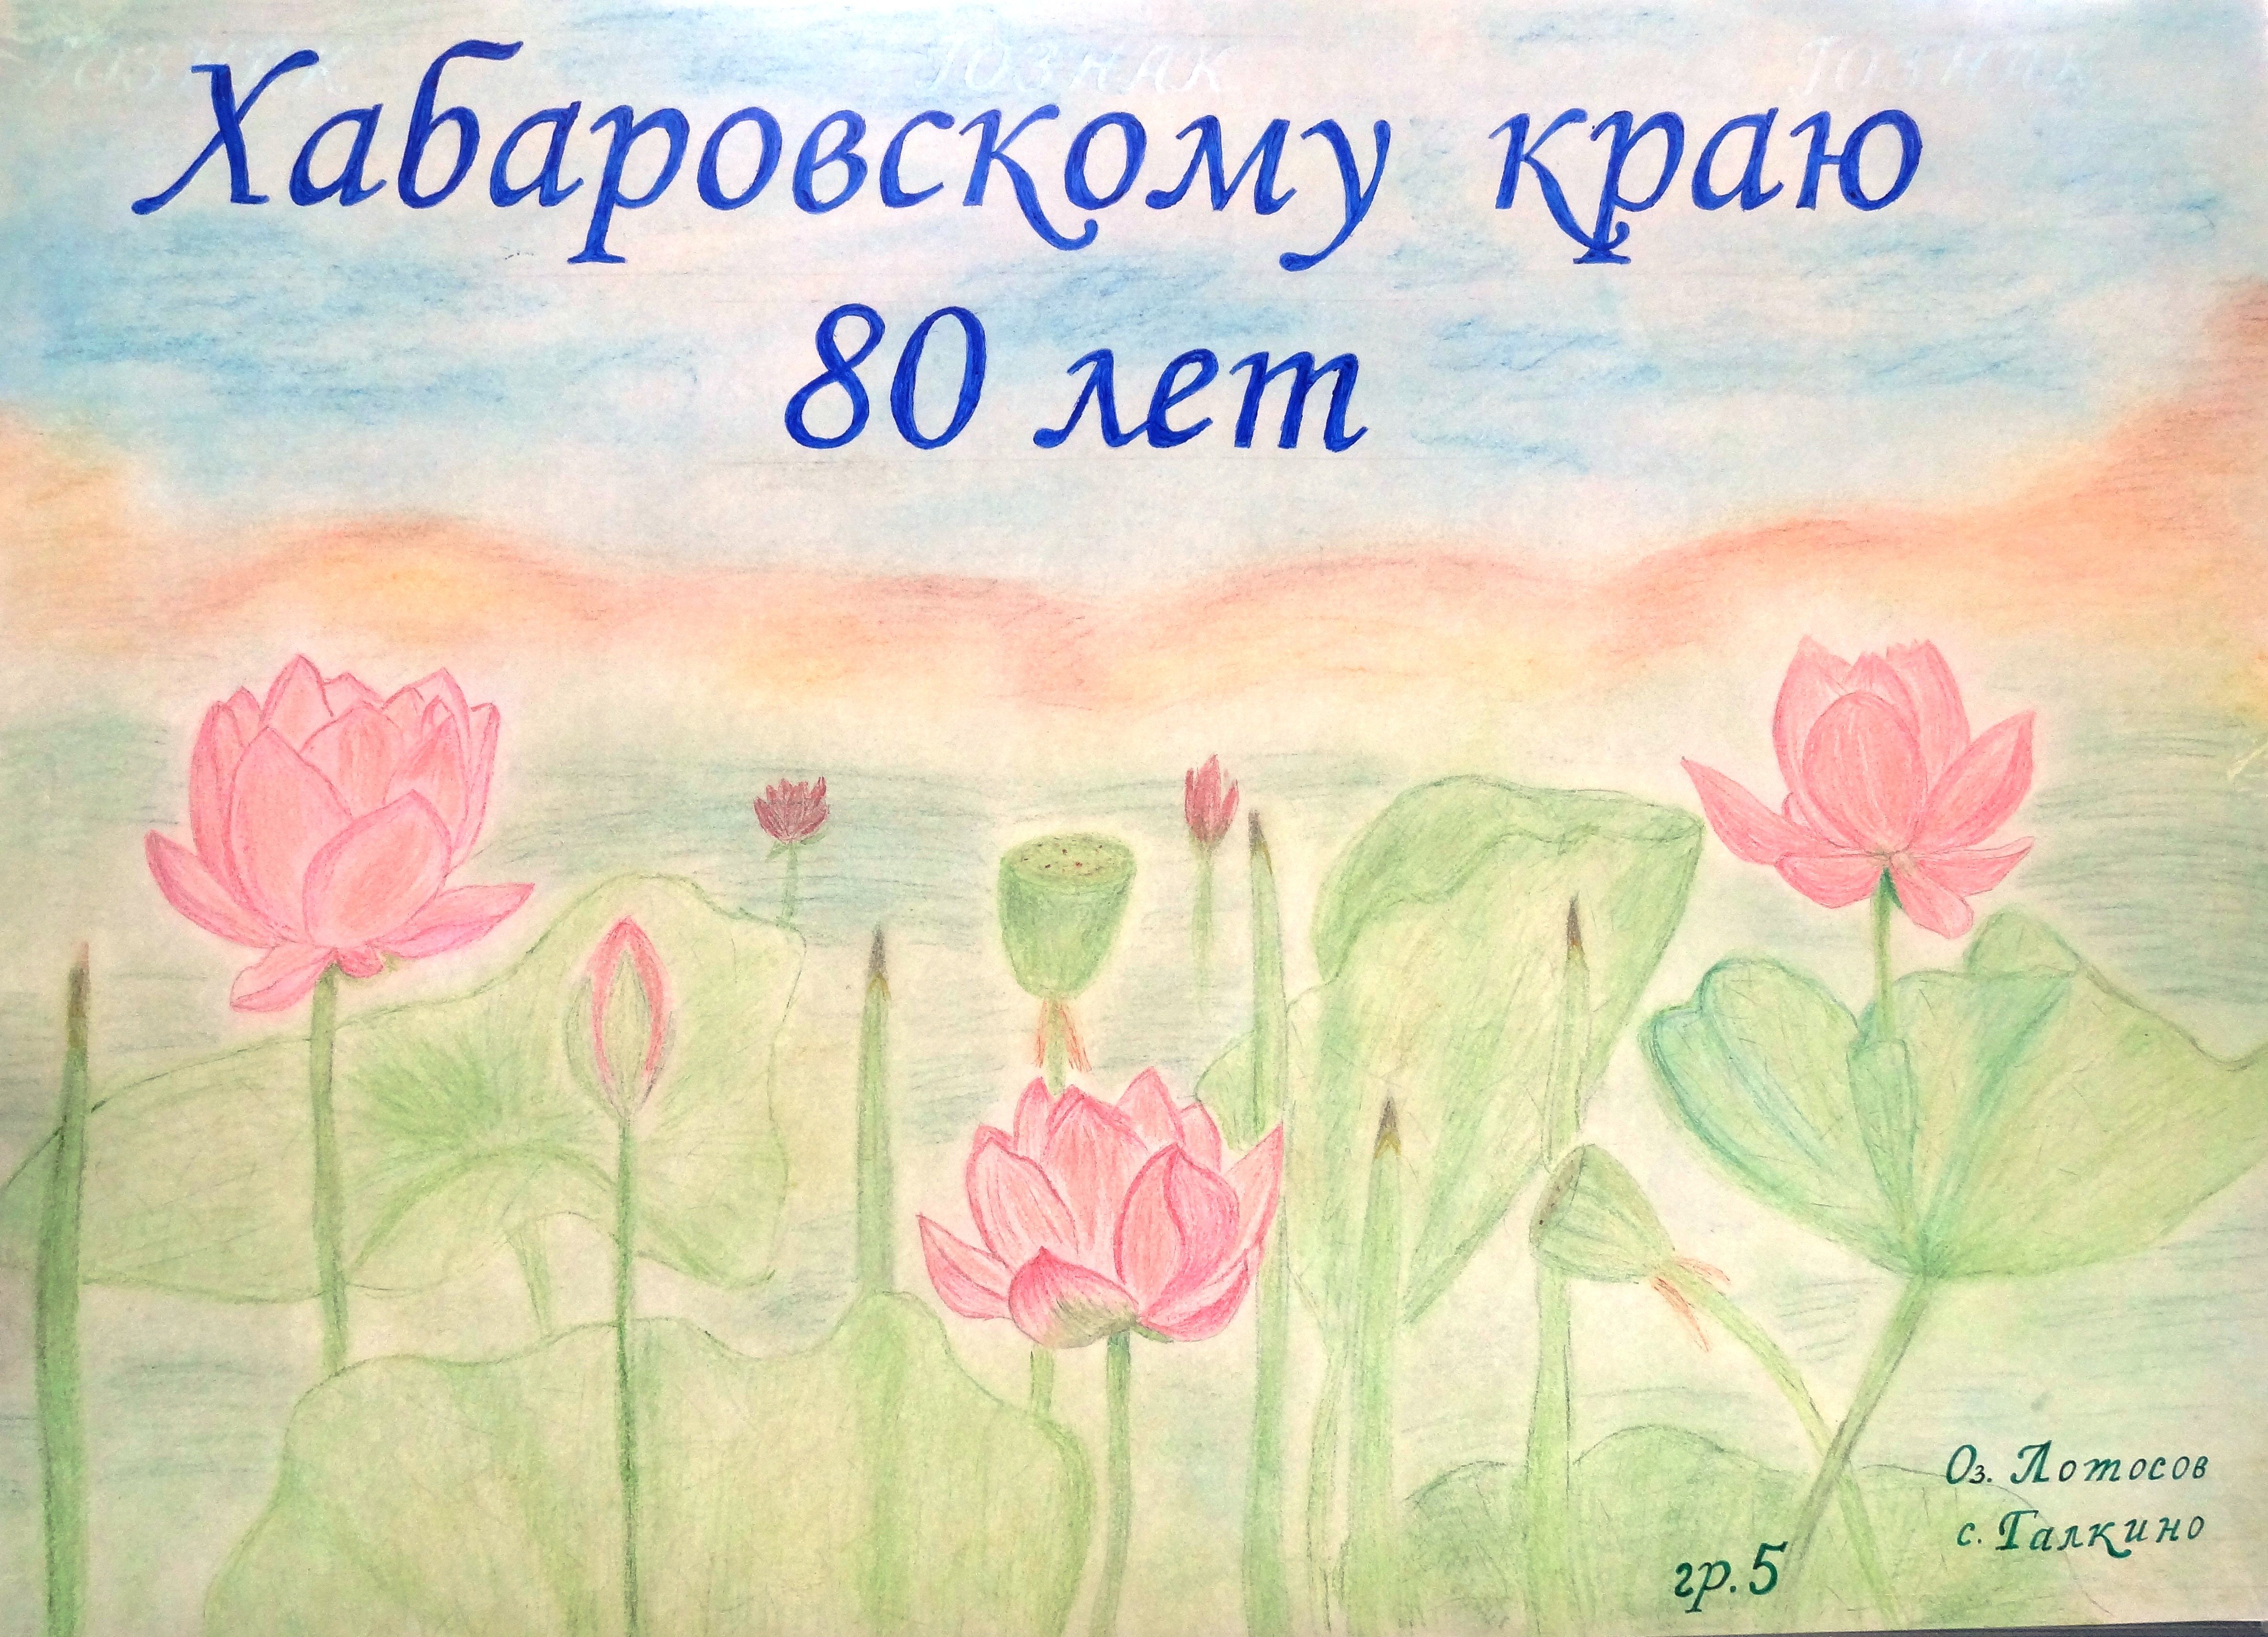 Плакат ко Дню Хабаровского края